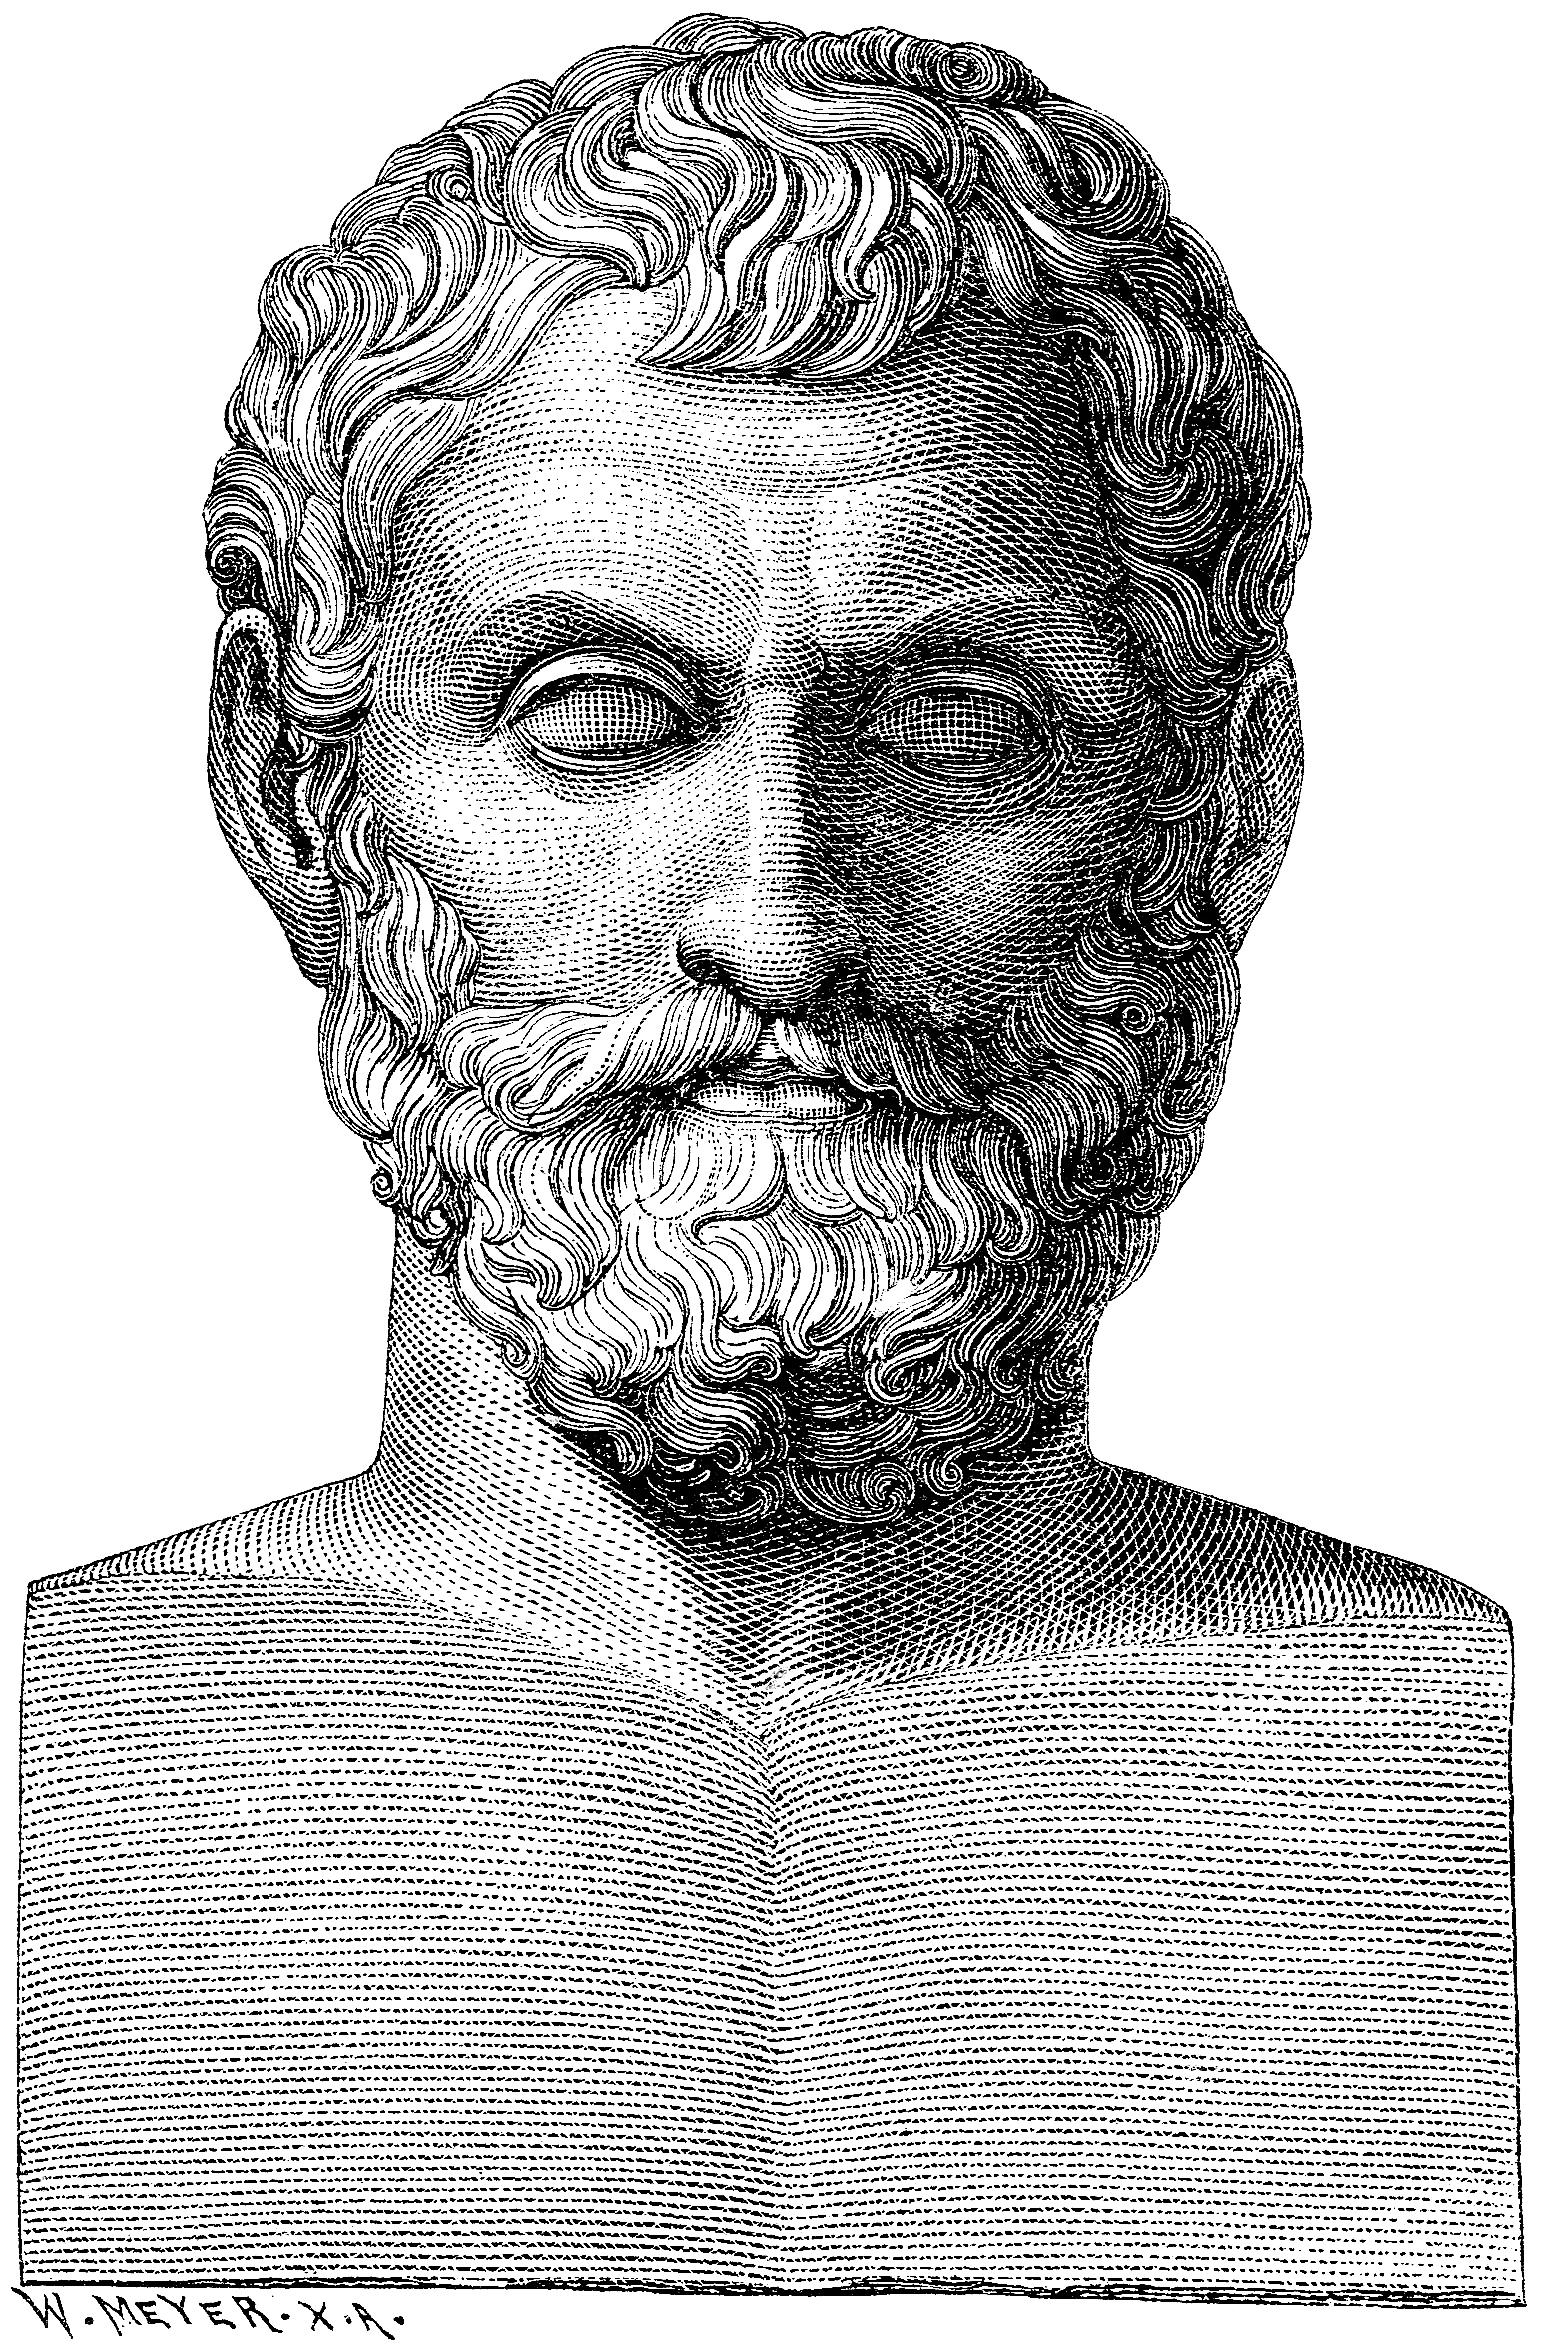 Thales din Milet